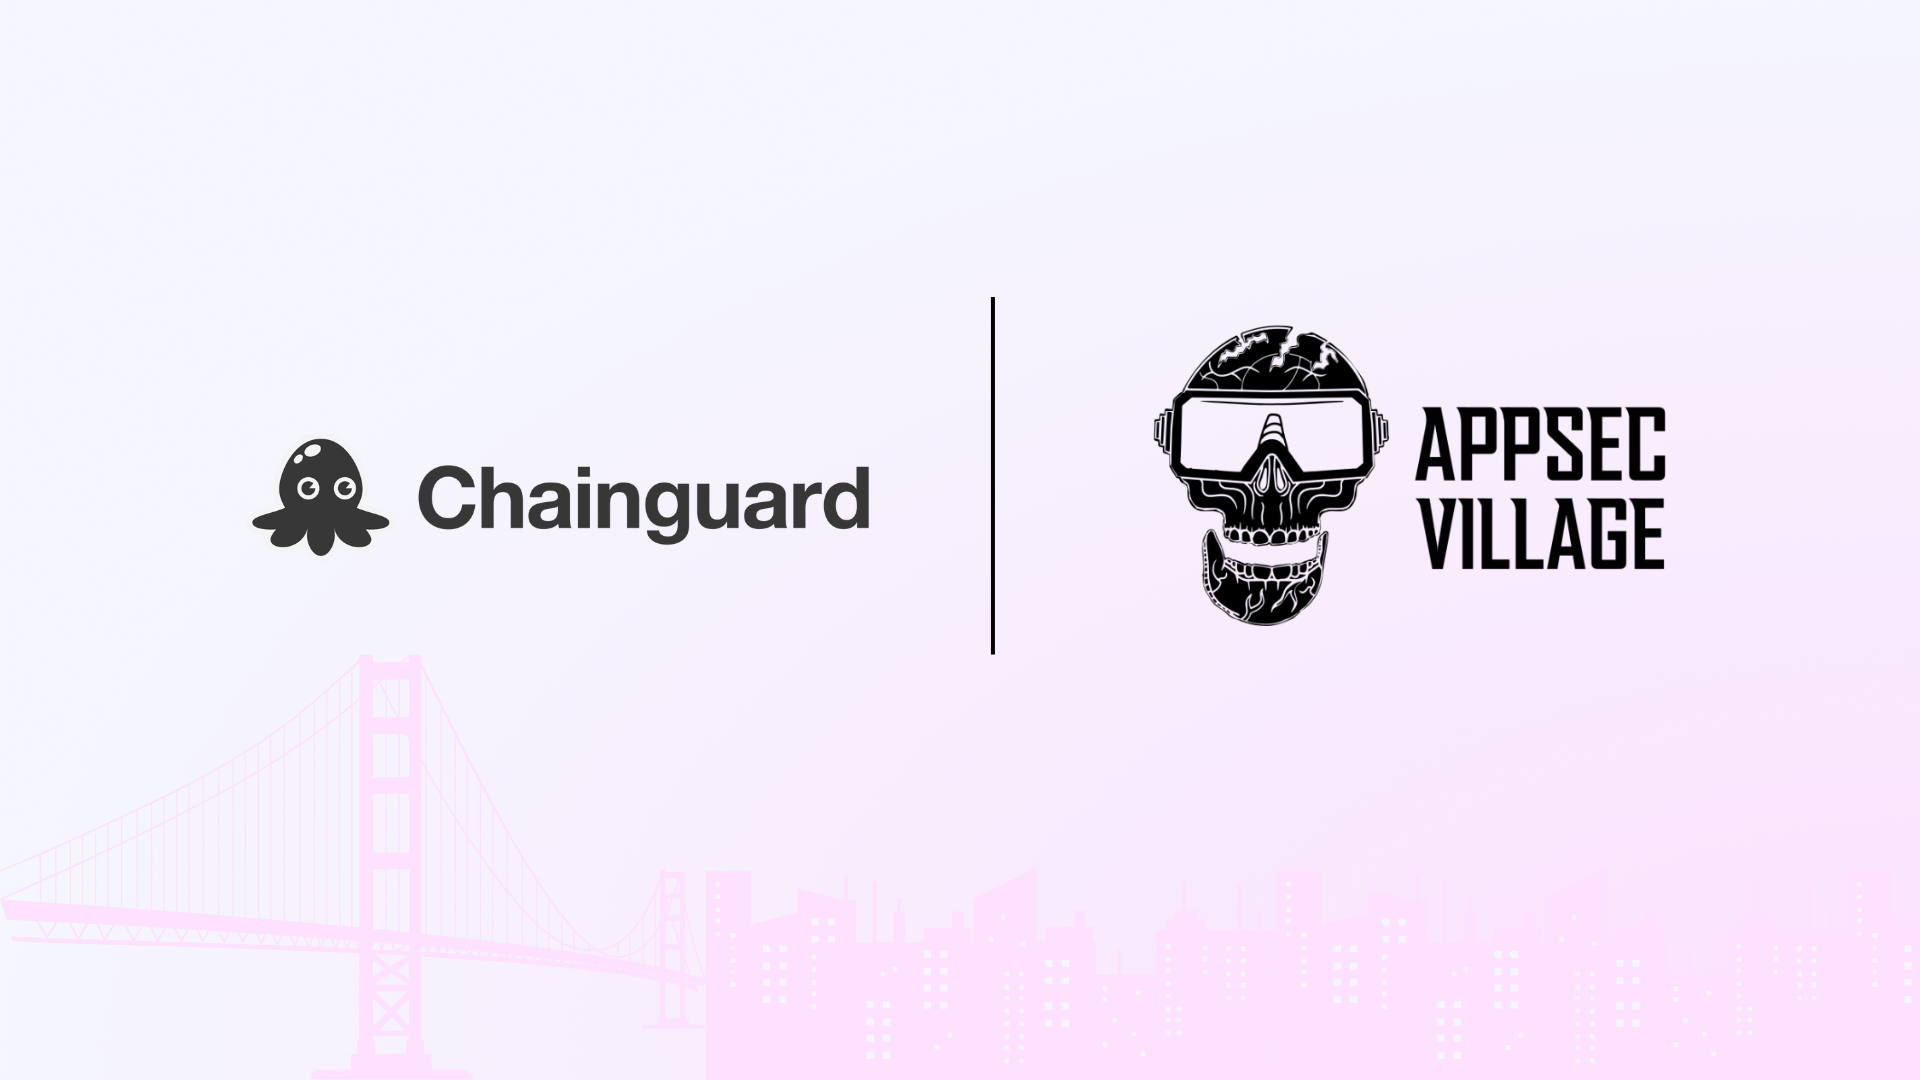 Chainguard at RSA Appsec Village